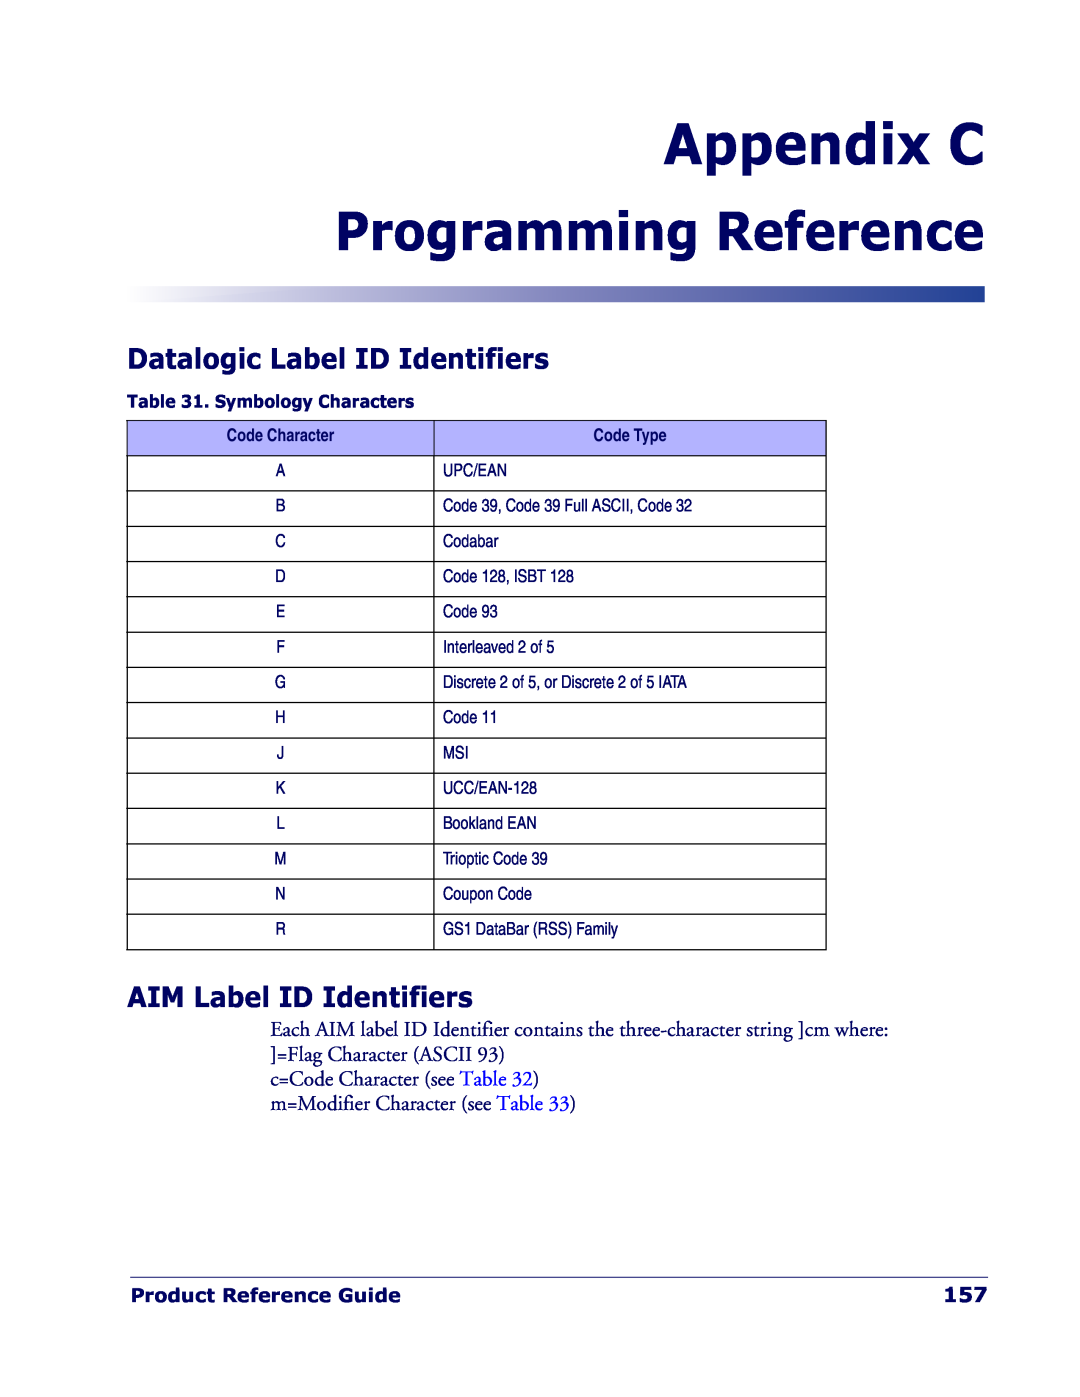 Datalogic Scanning QD 2300 Appendix C, Programming Reference, Datalogic Label ID Identifiers, AIM Label ID Identifiers 